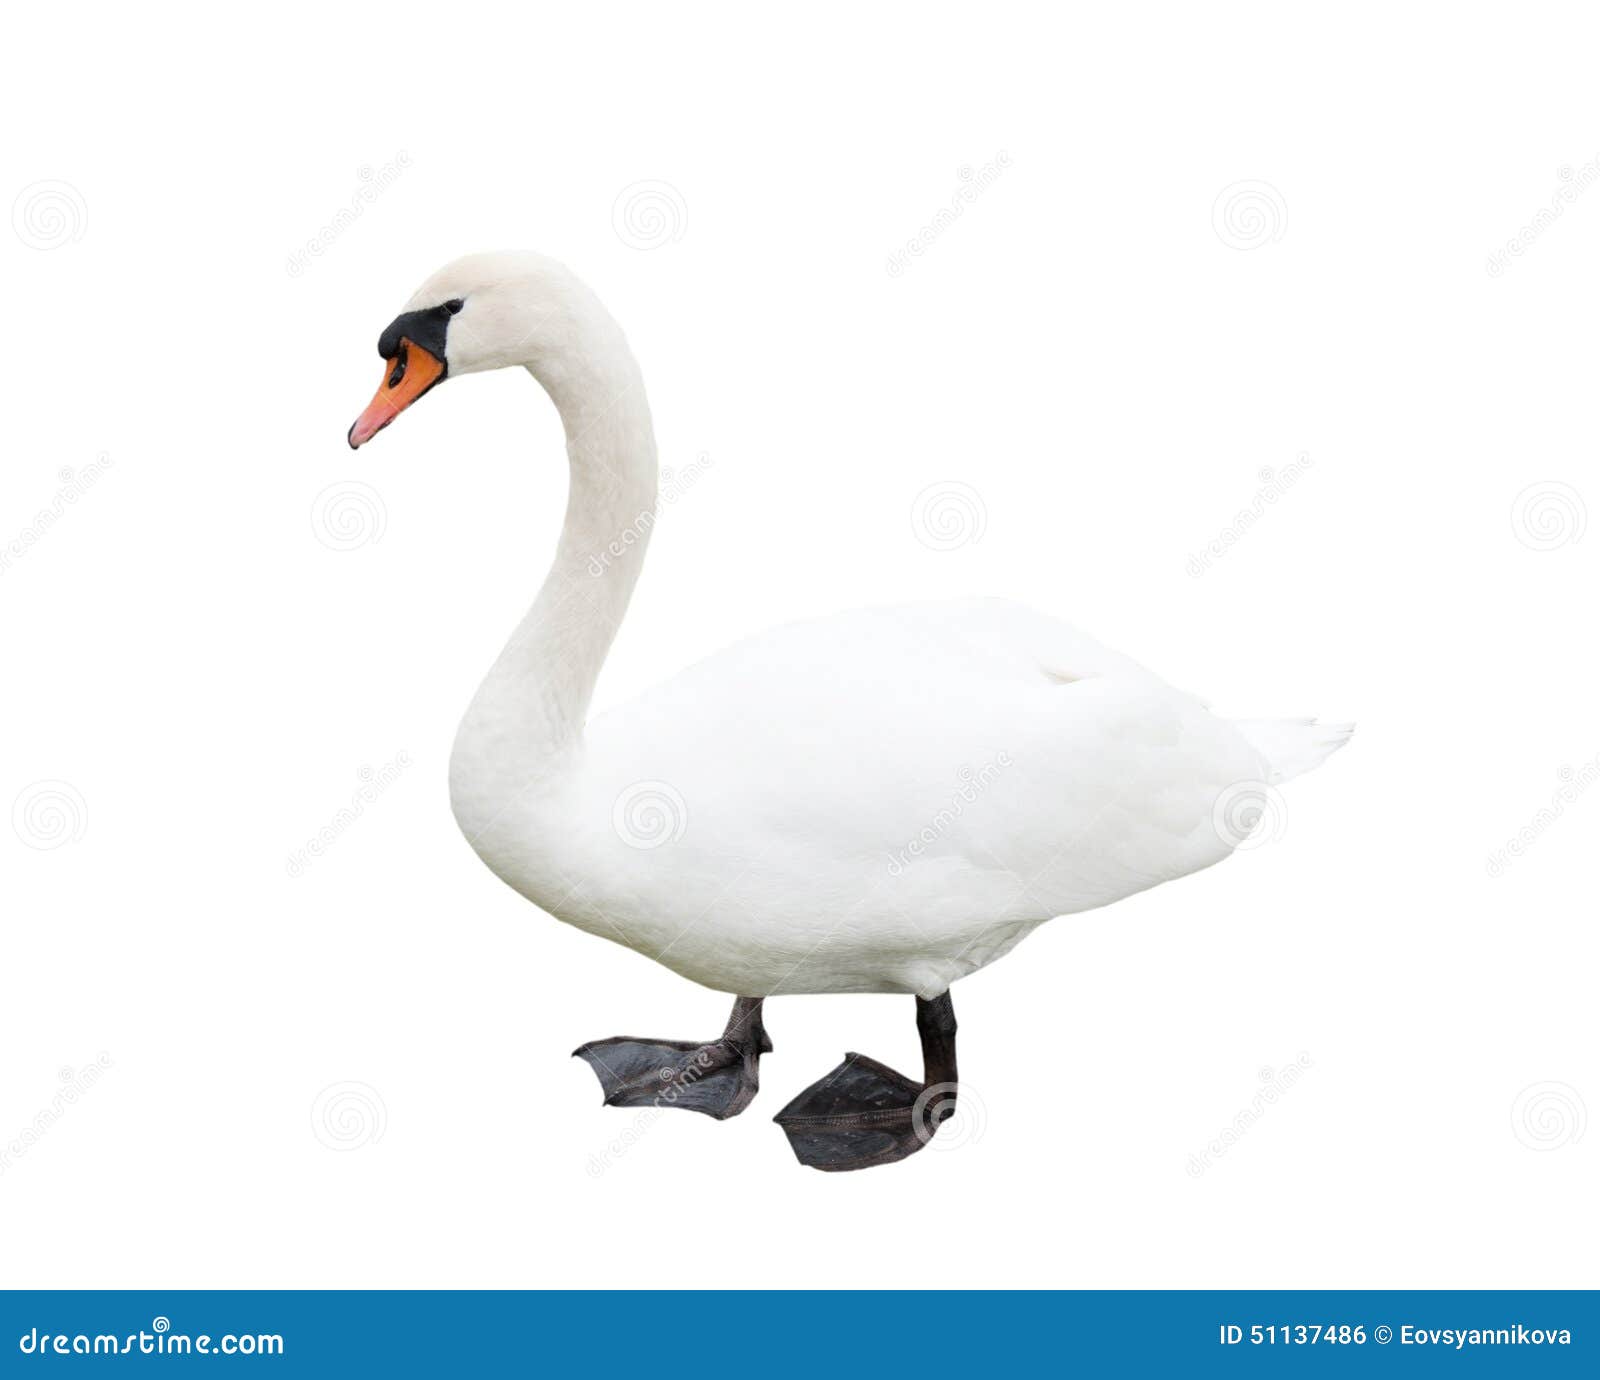 one white swan, 